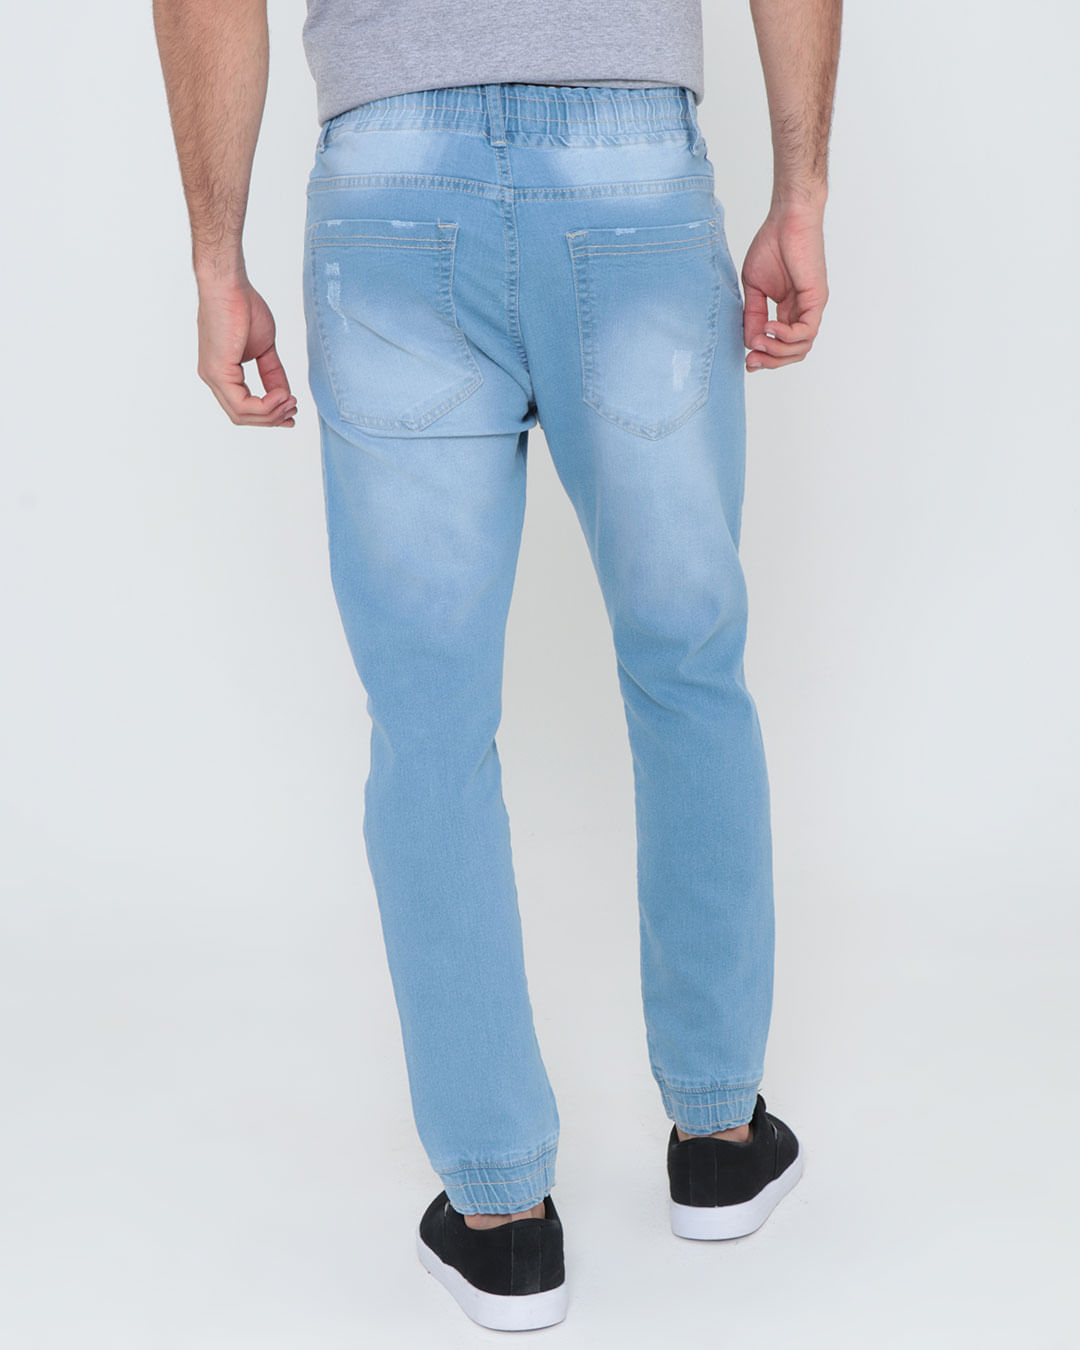 Calca-6052-Jeans-Jogger-Delave-Jv---Blue-Jeans-Claro